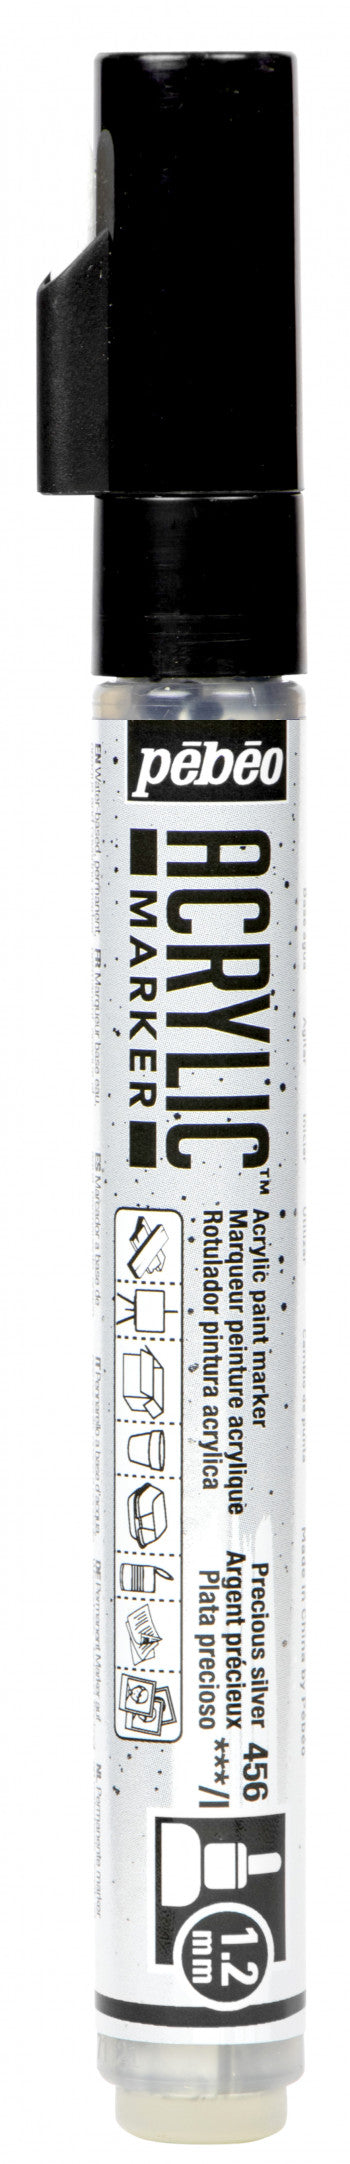 Acrylic Marker 1.2mm Pebeo      Argent précieux - 456